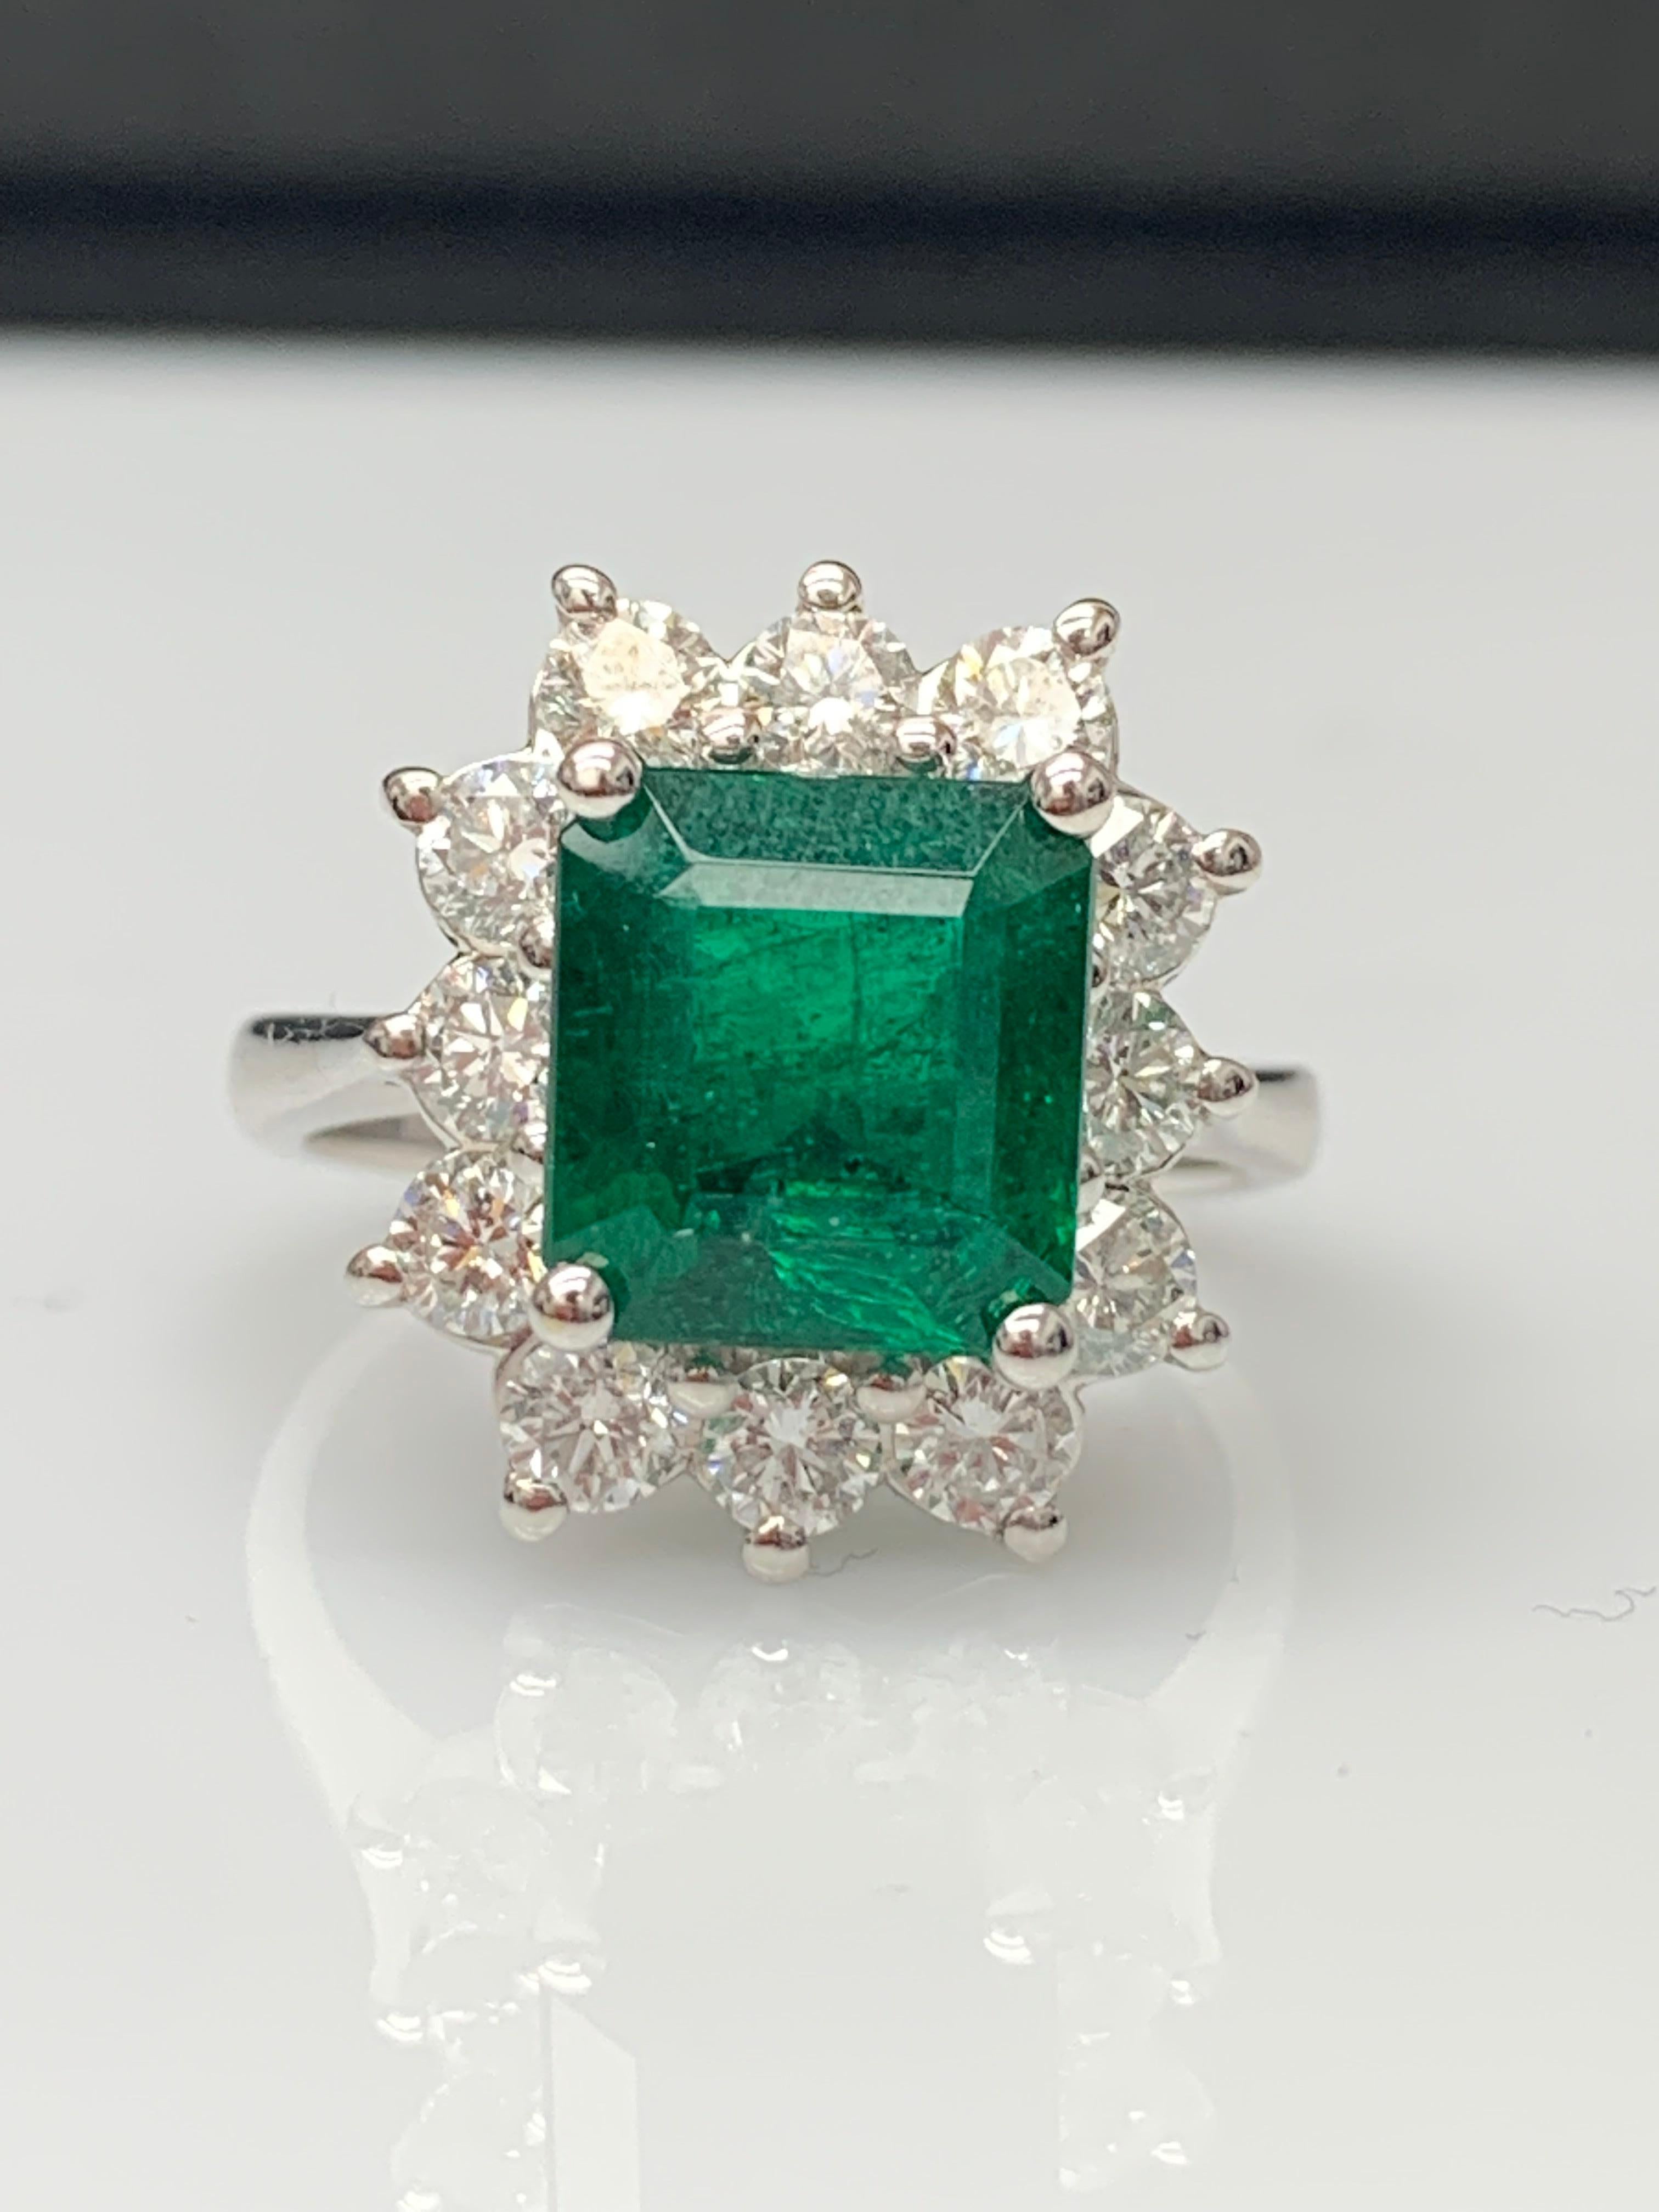 Modern Certified 3.17 Carat Emerald Cut Emerald Diamond Ring in 14K White Gold For Sale